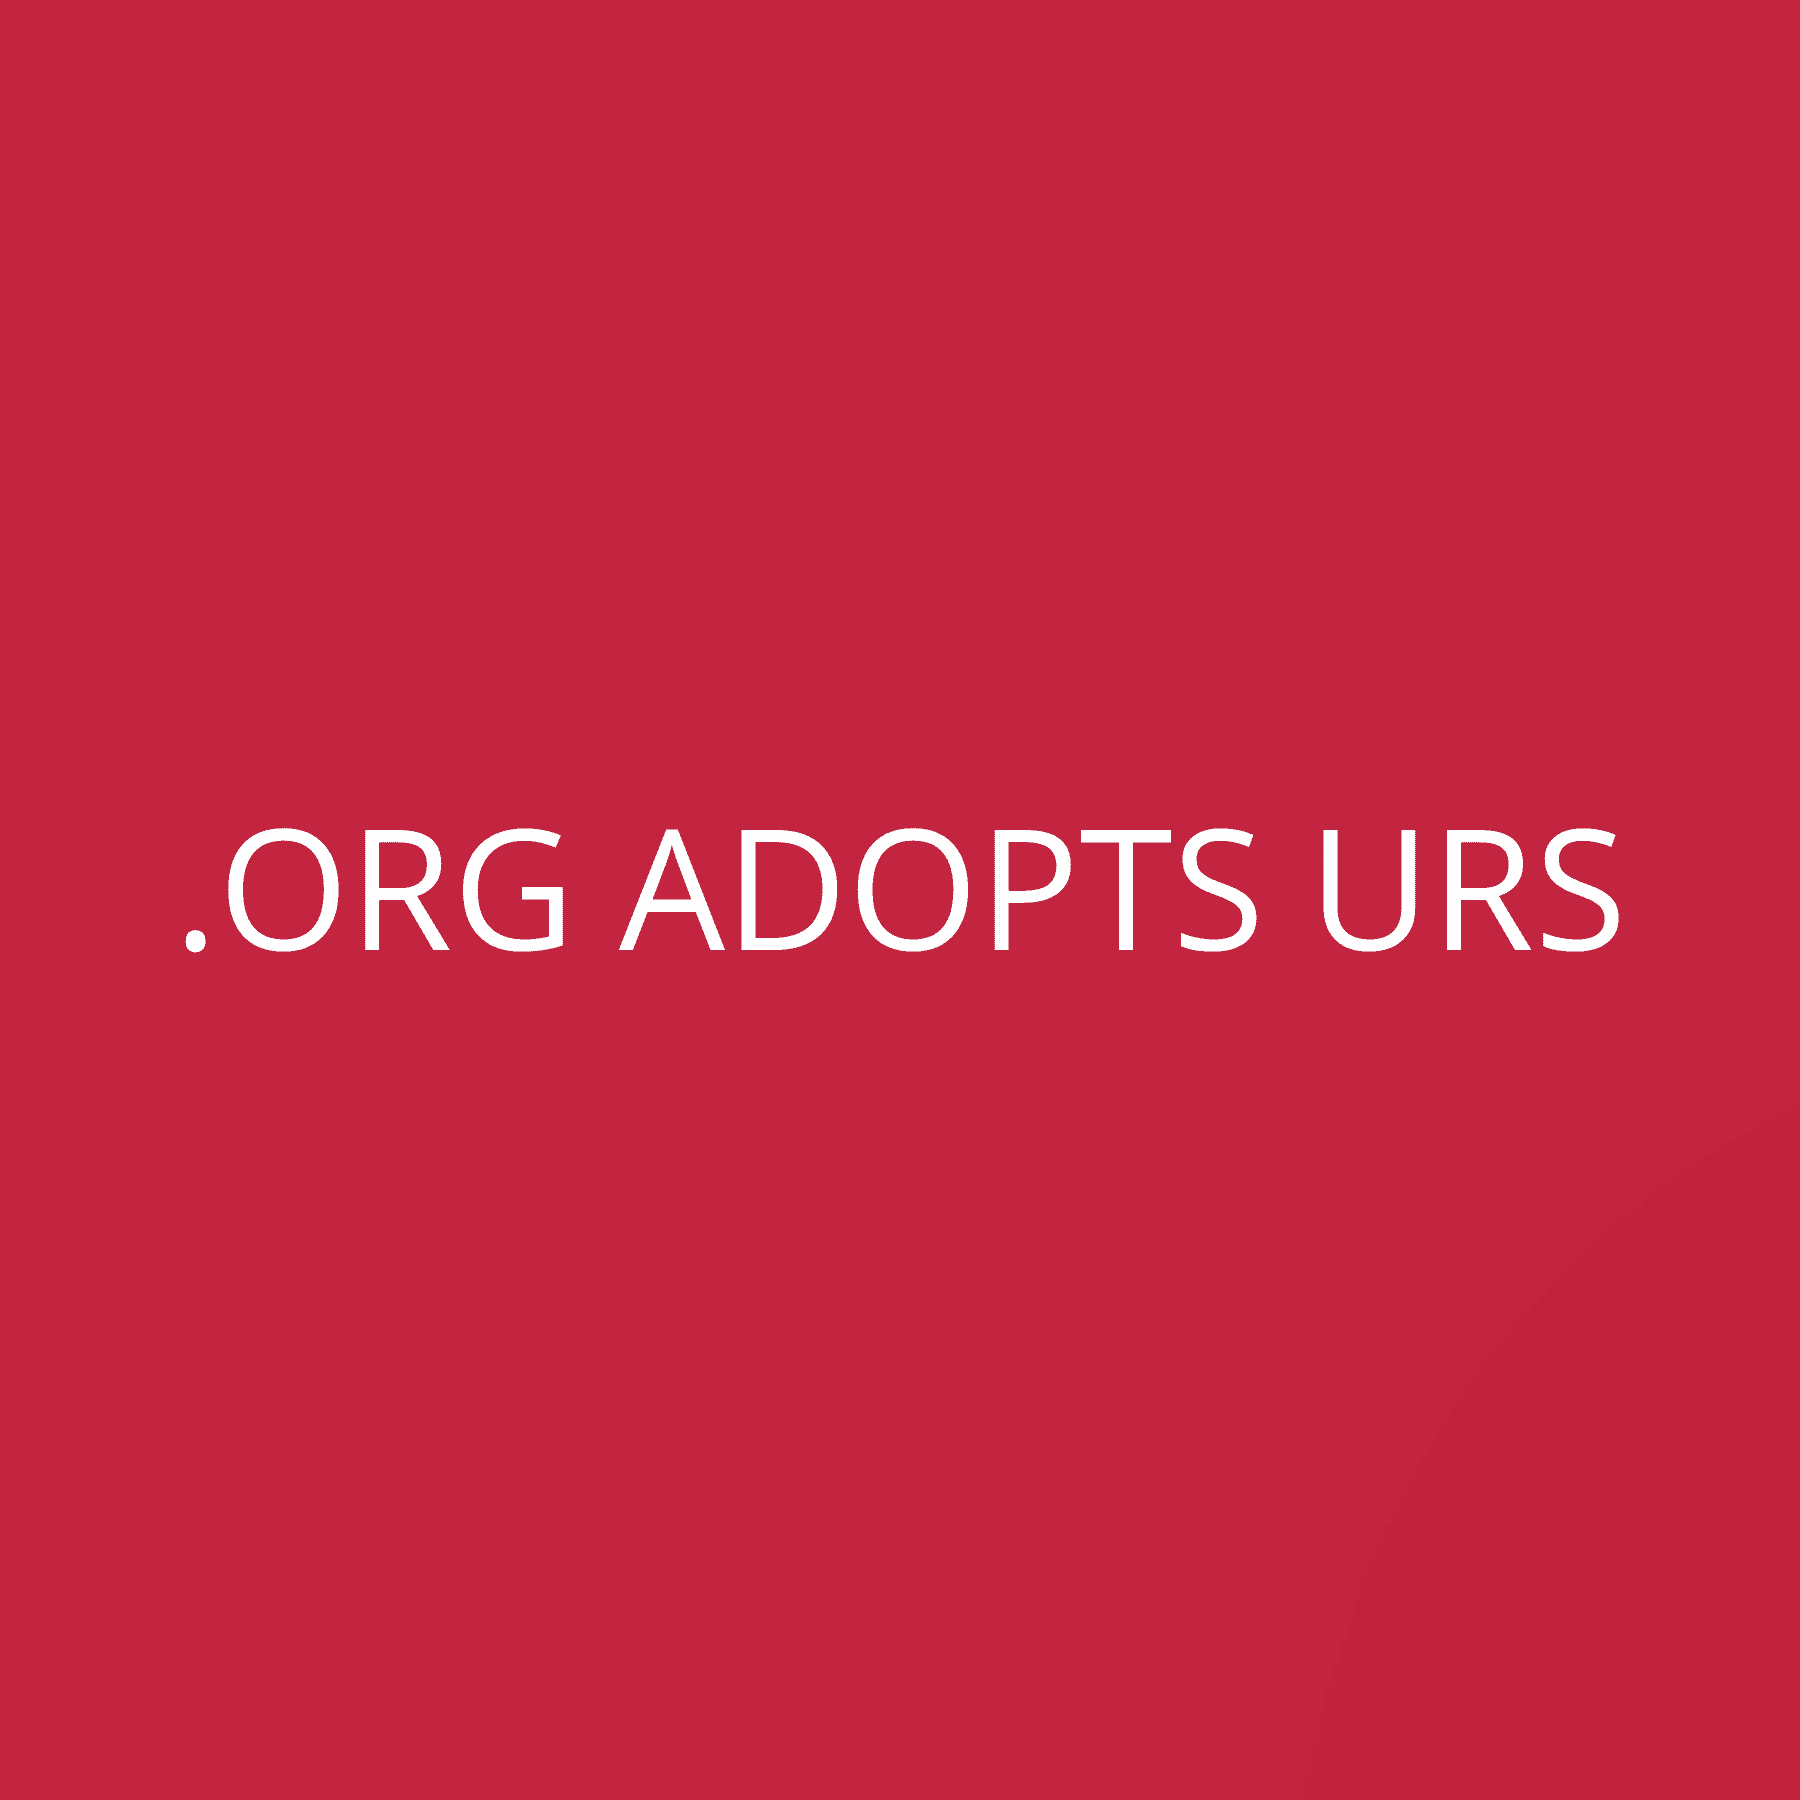 .org adopts URS